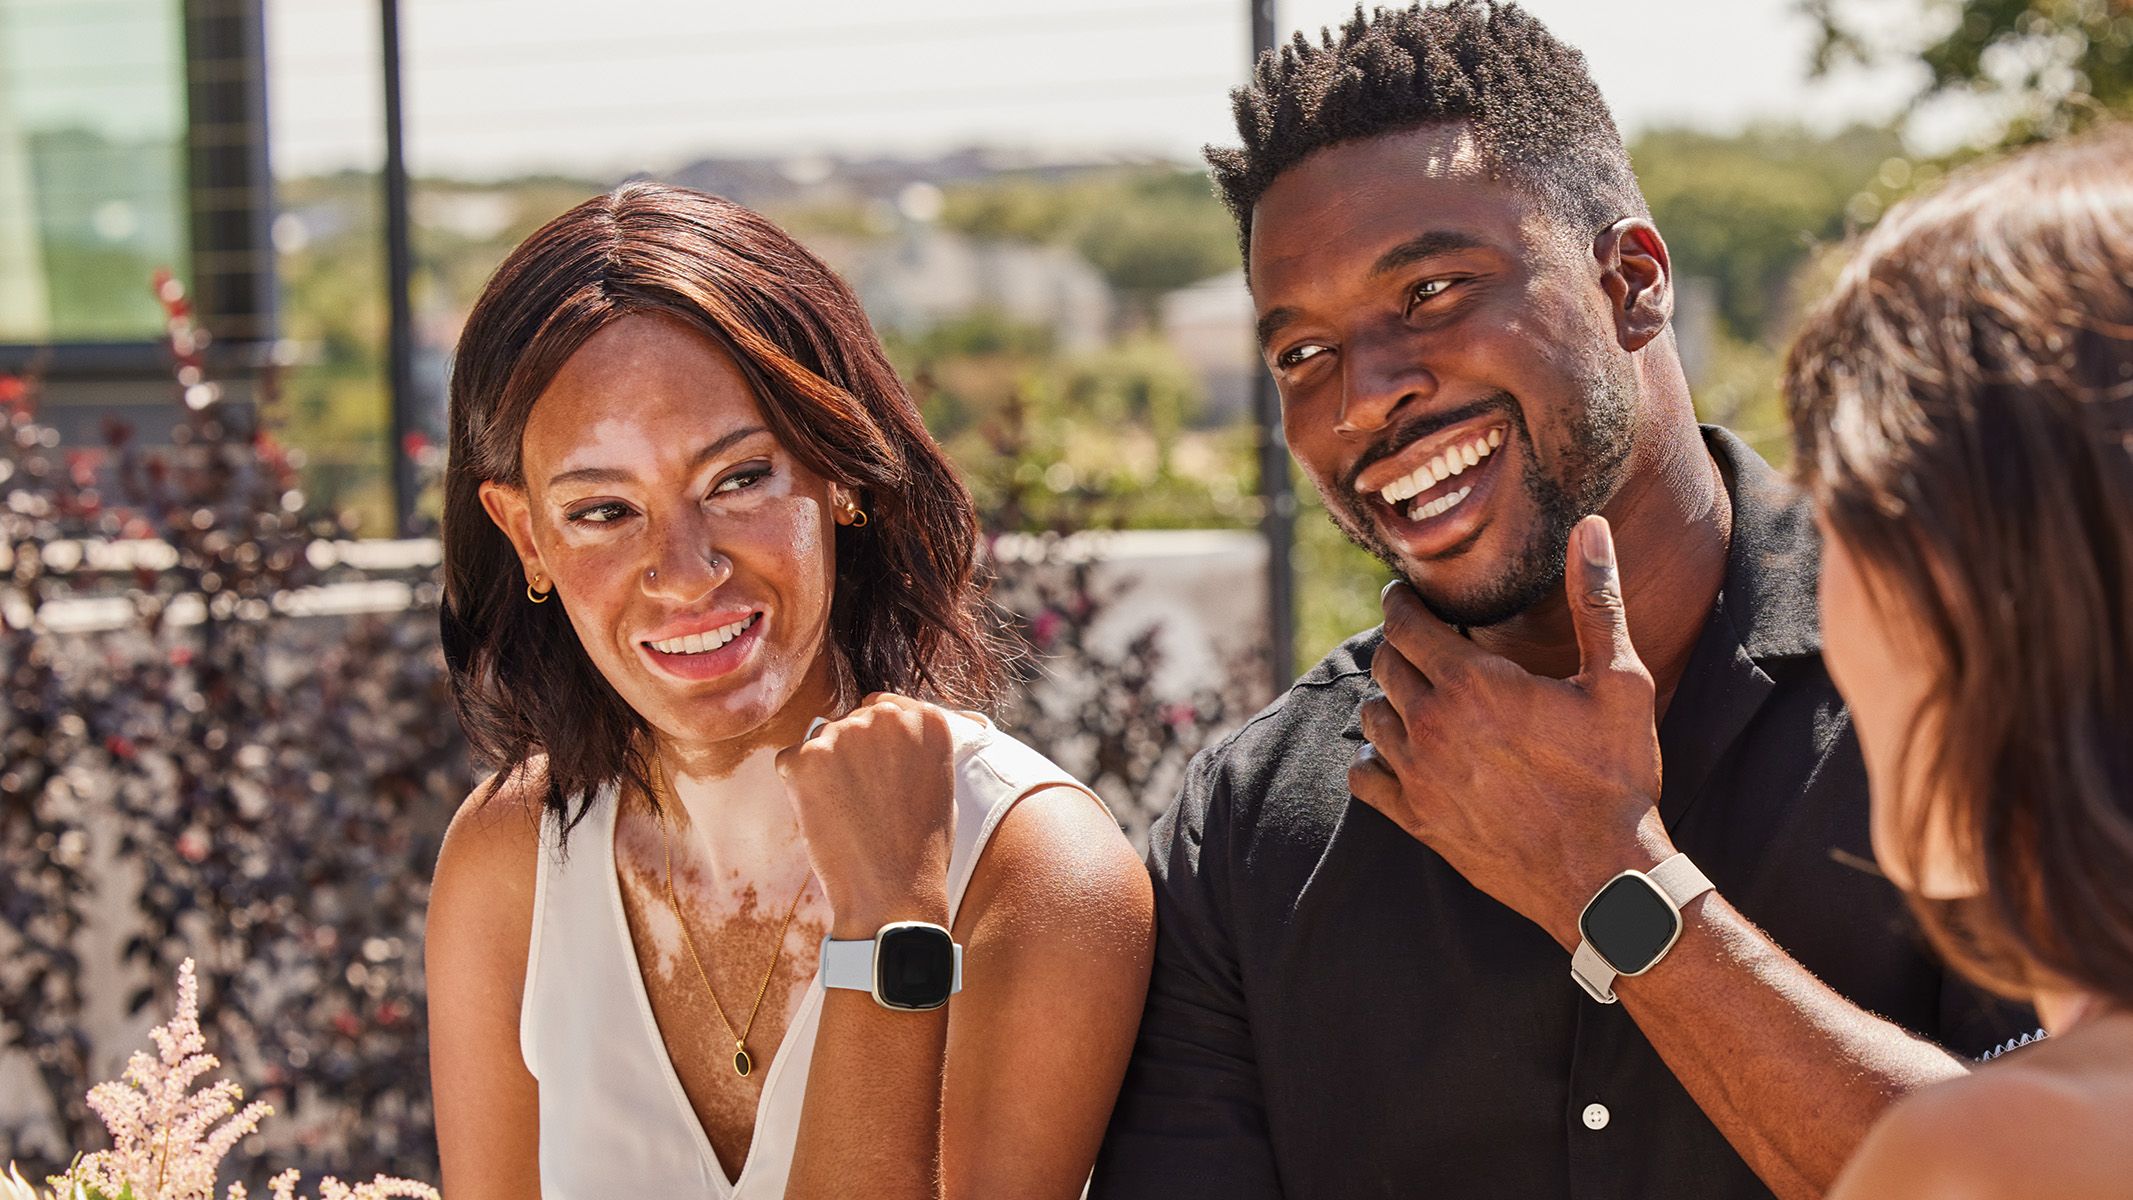 Fitbit Sense 2 Smartwatch